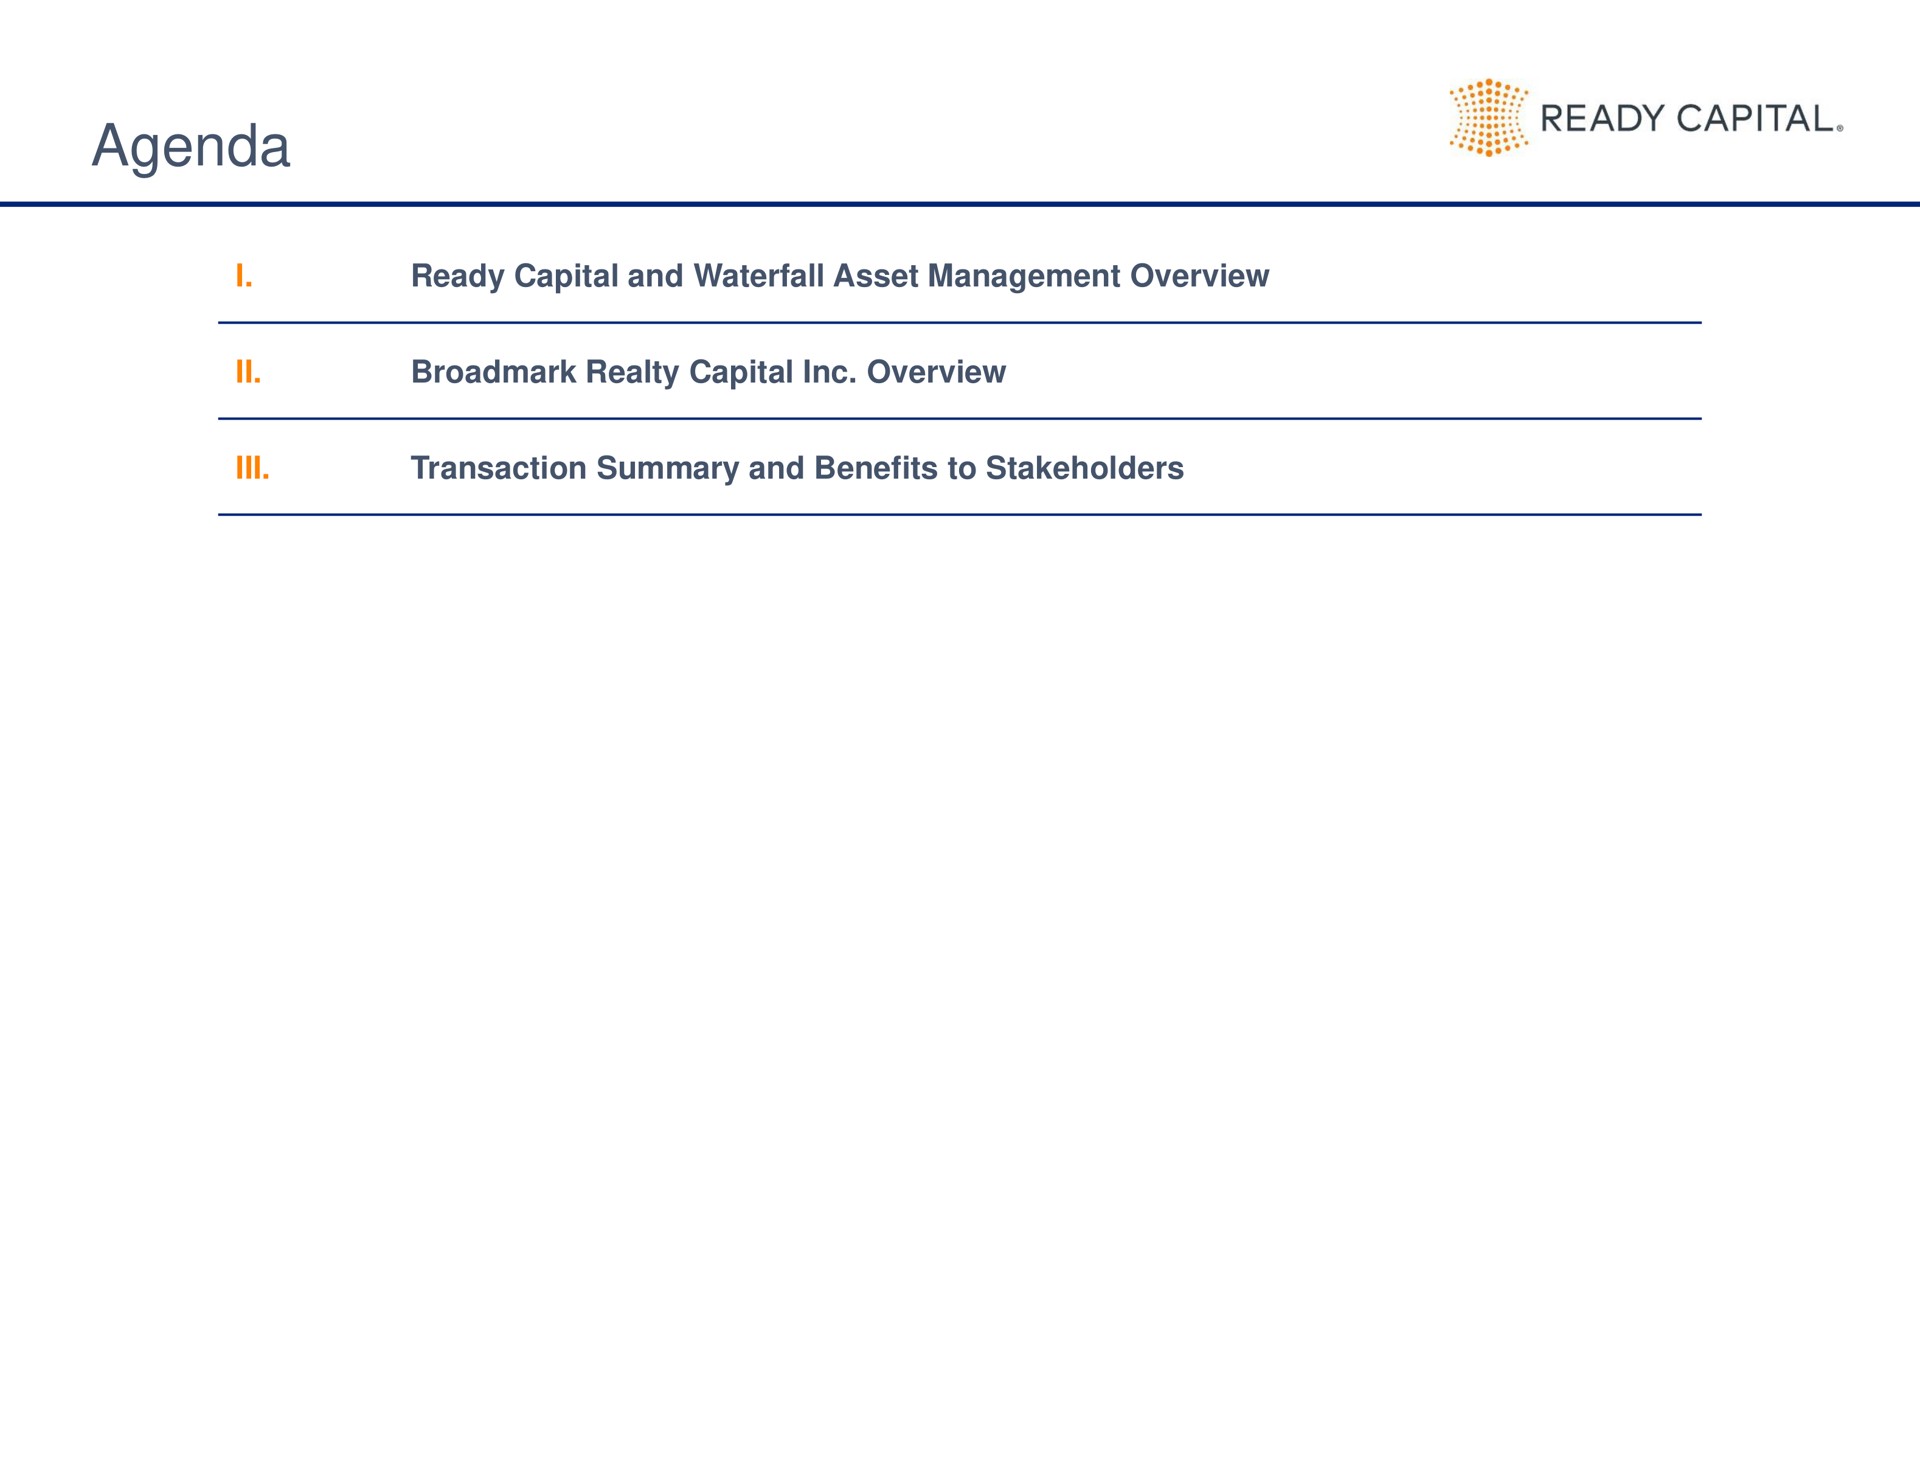 agenda ready capital | Ready Capital